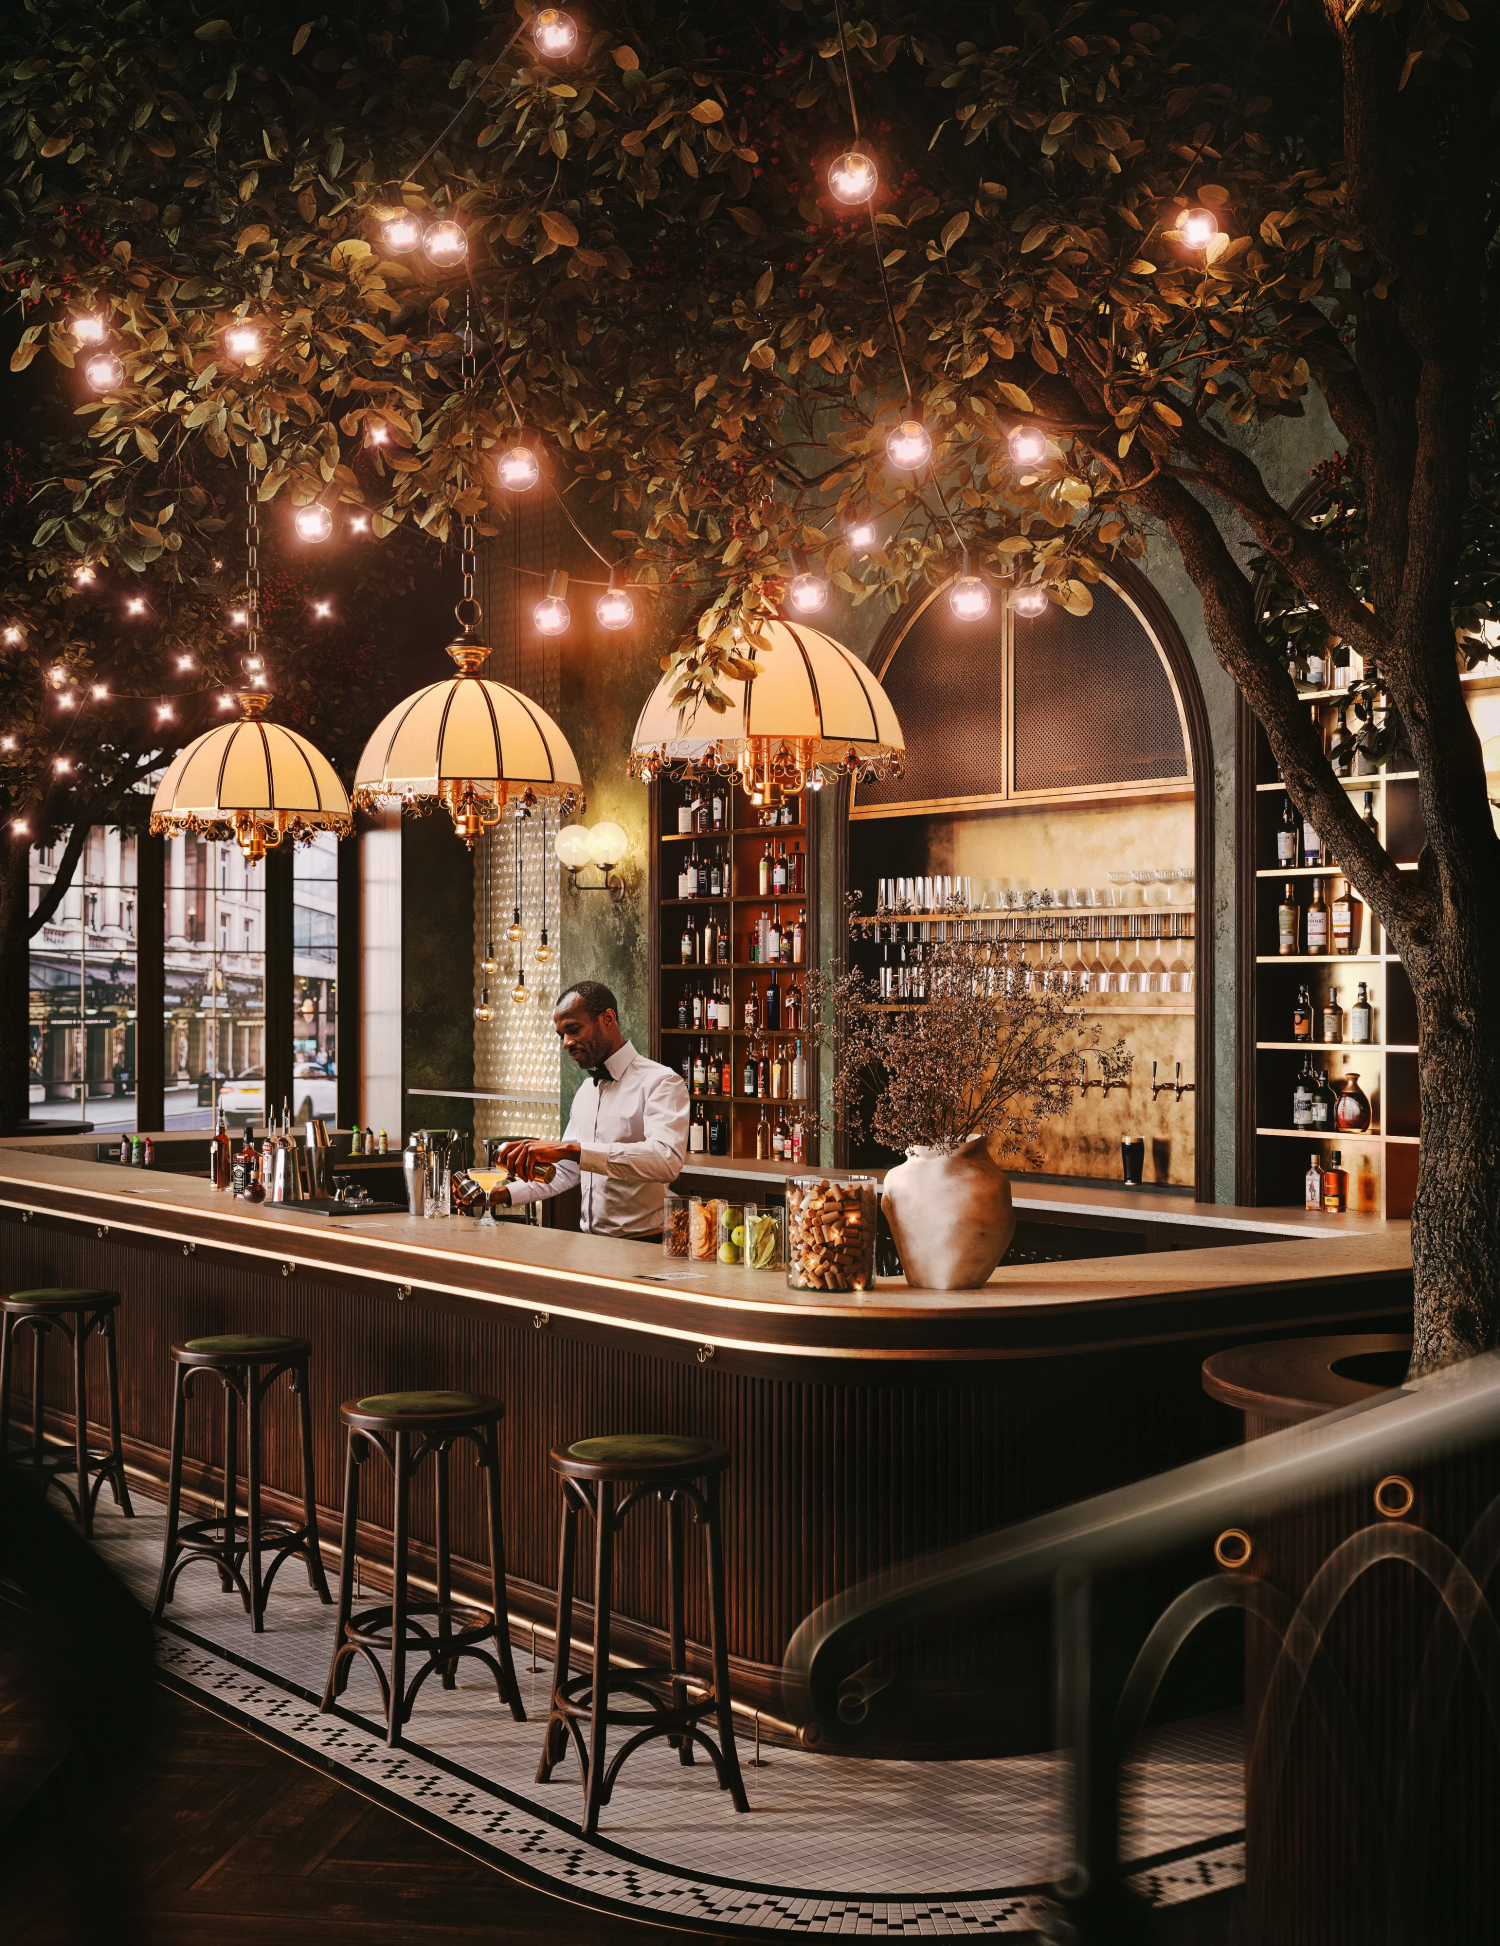 3D Restaurant Interior with a Barman